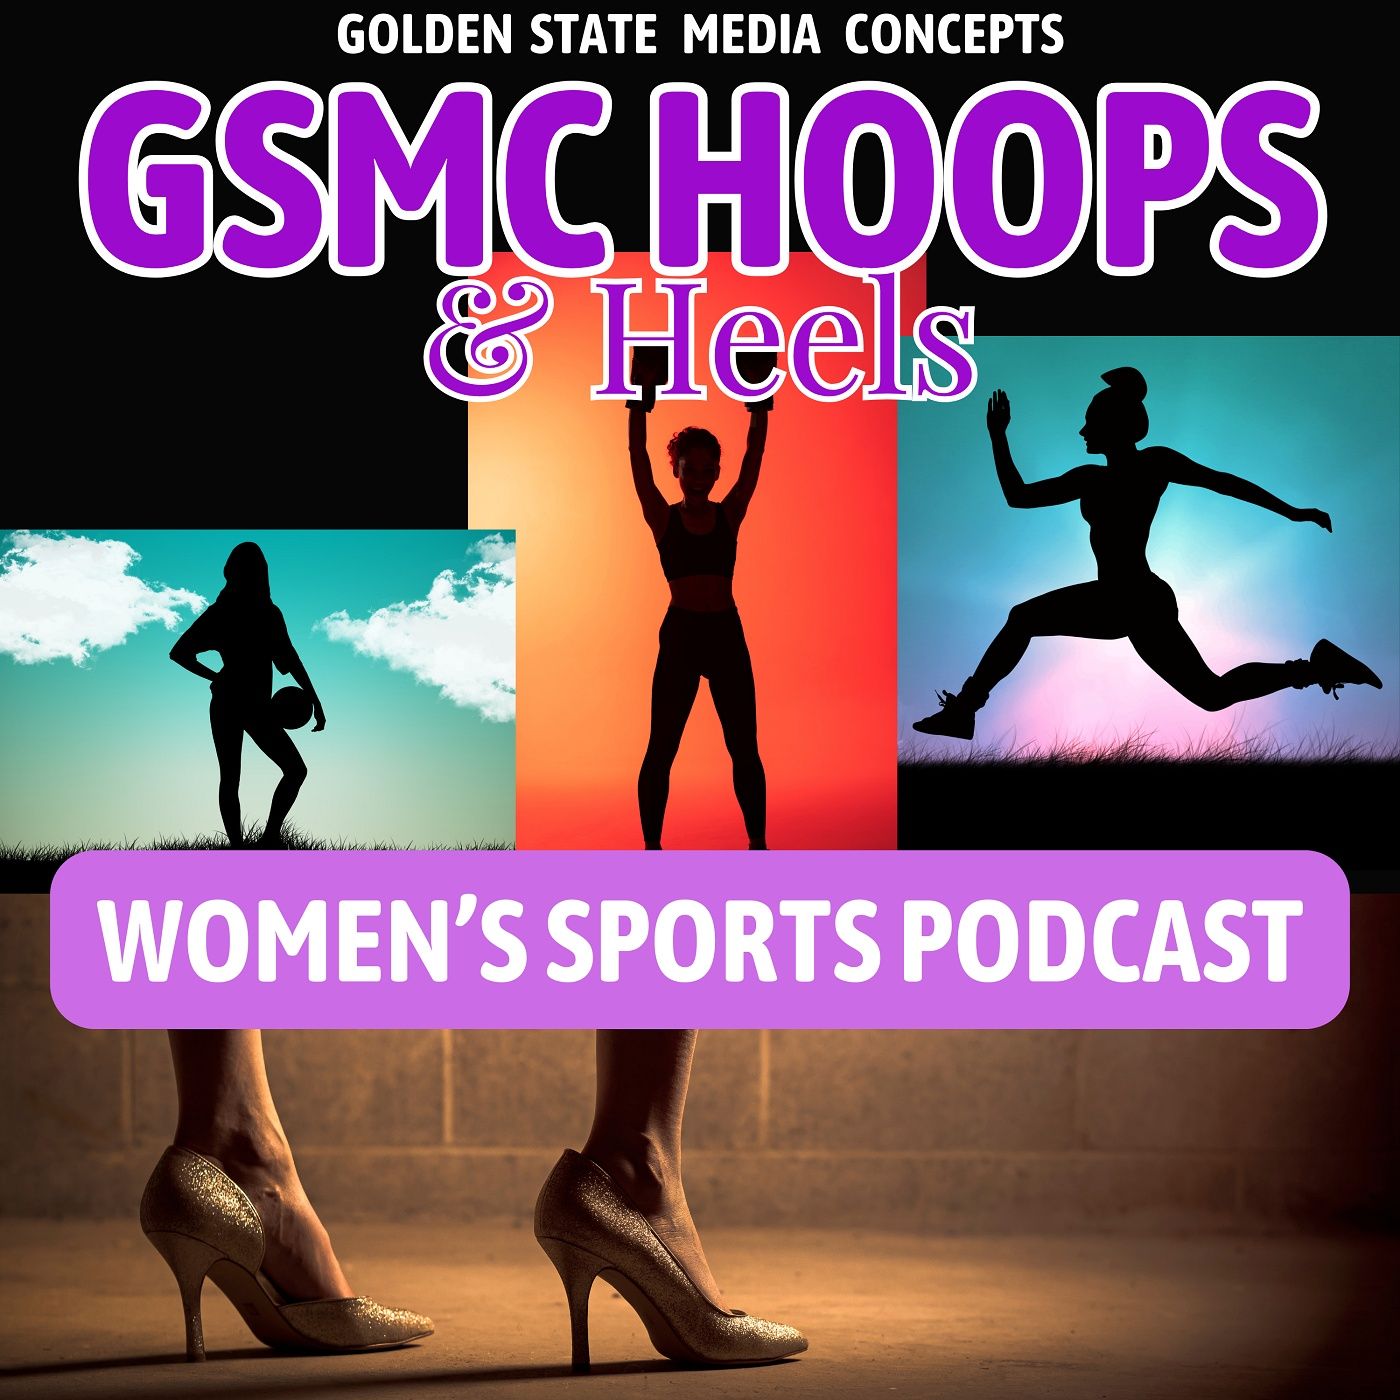 Gabby Douglas’ Return to The Olympics | GSMC Hoops & Heels Women’s Sports Podcast